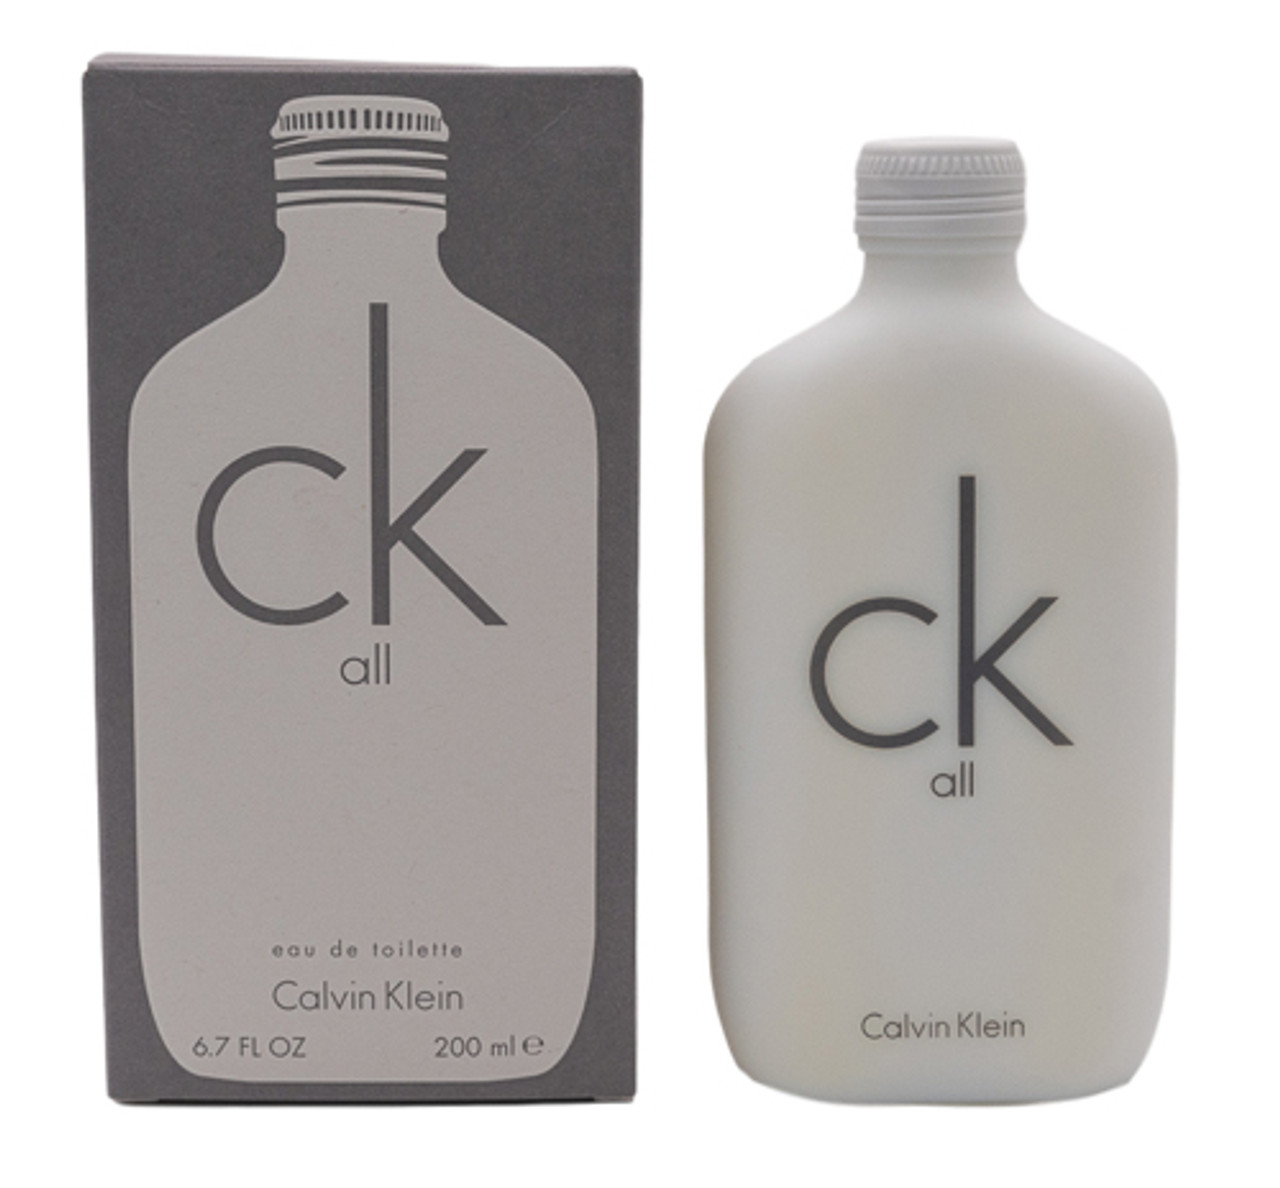 Ck All by Calvin Klein 6.7 oz EDT Unisex - ForeverLux